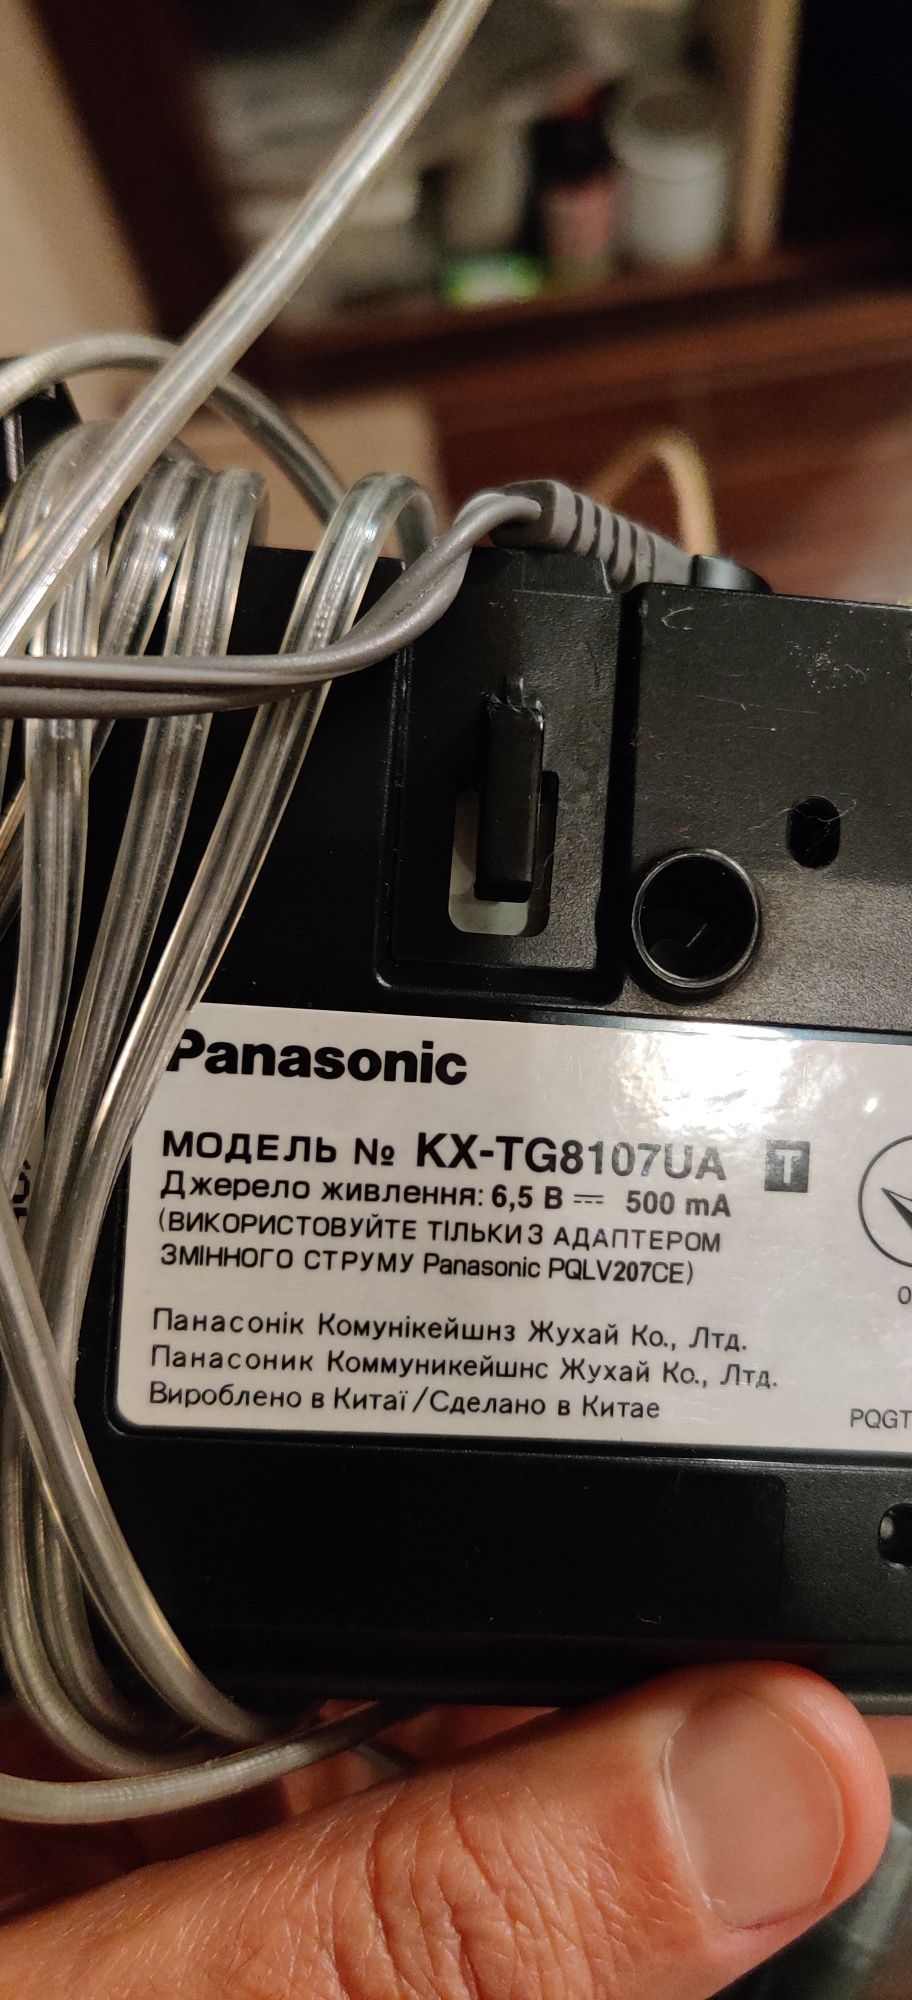 Продам цифровой телефон  Panasonic KX-TG8107 UA